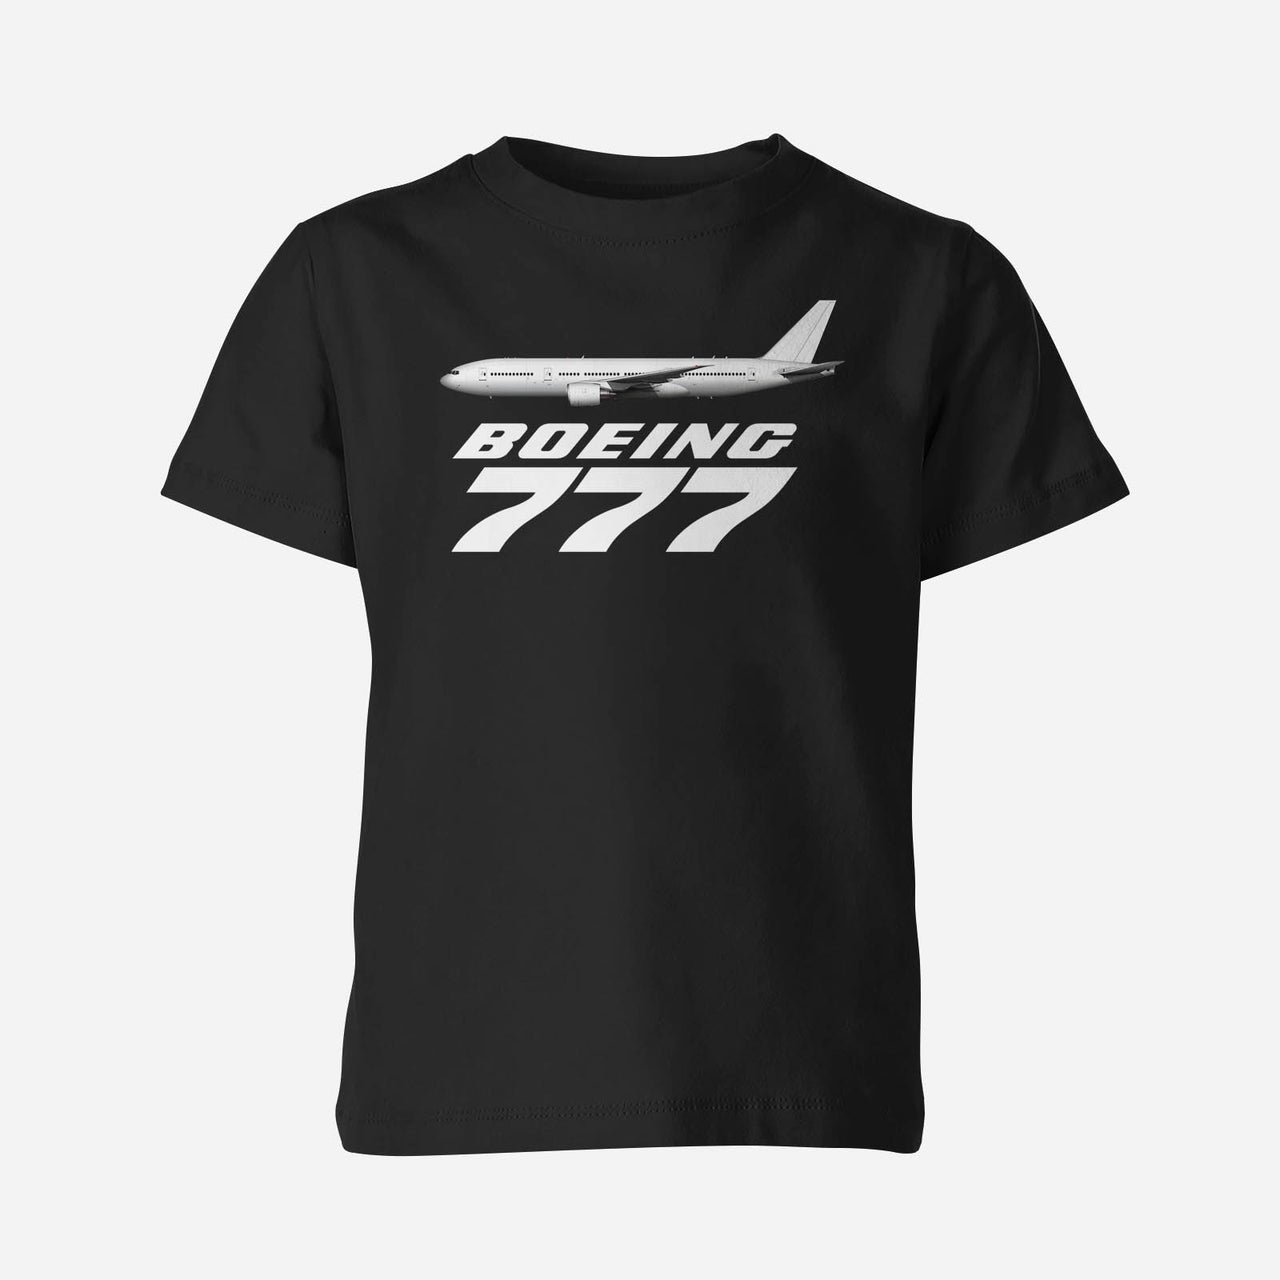 The Boeing 777 Designed Children T-Shirts